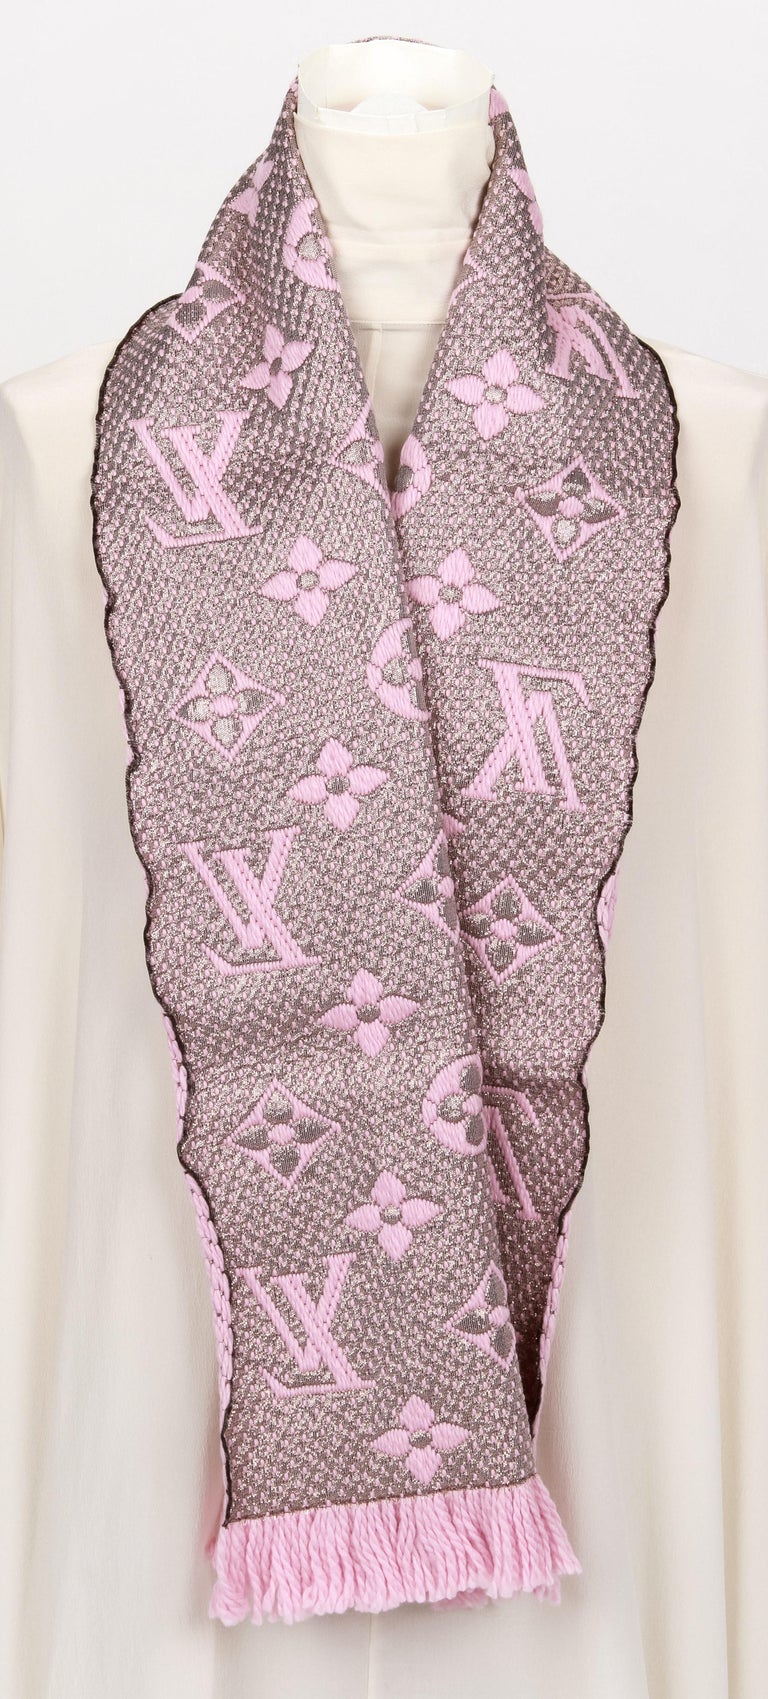 vuitton pink scarf price